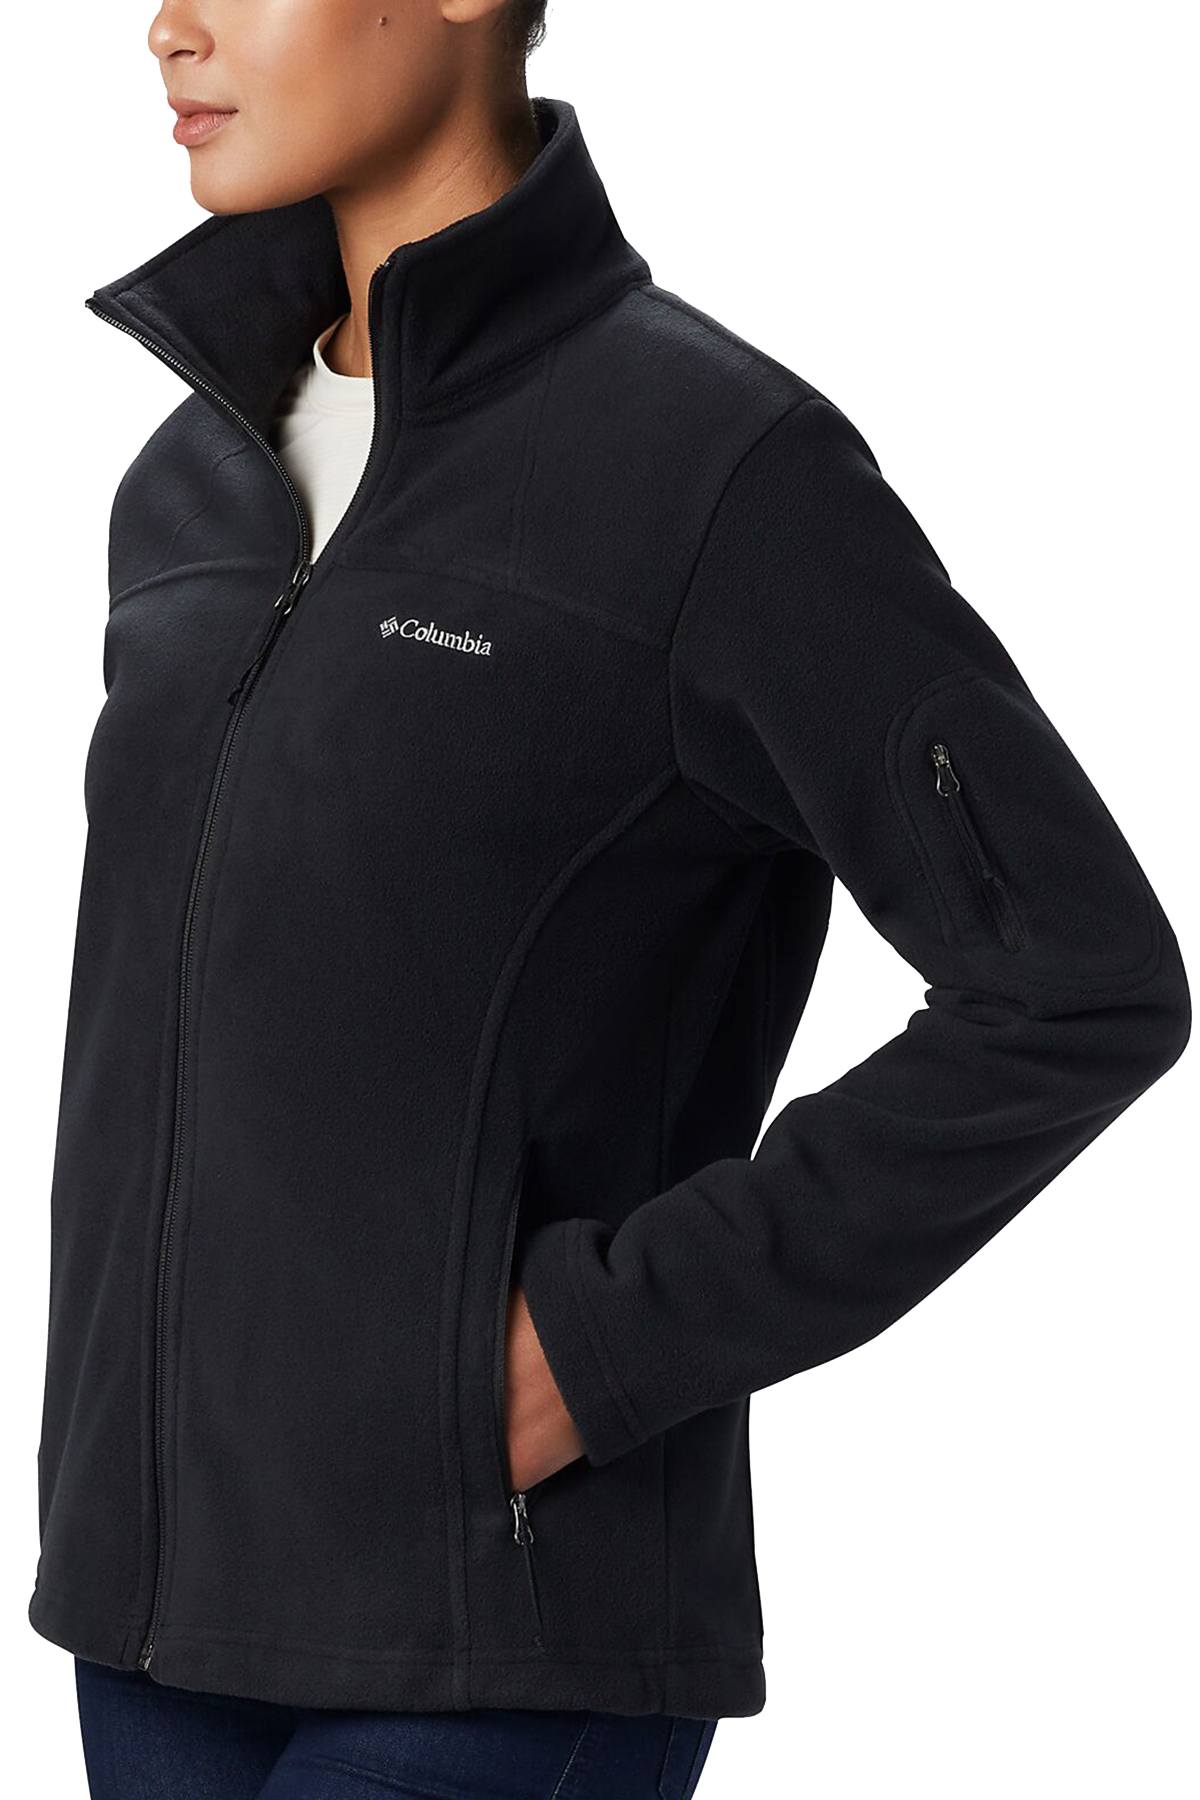 Columbia Black Cool Intervention Full-Zip Fleece Jacket